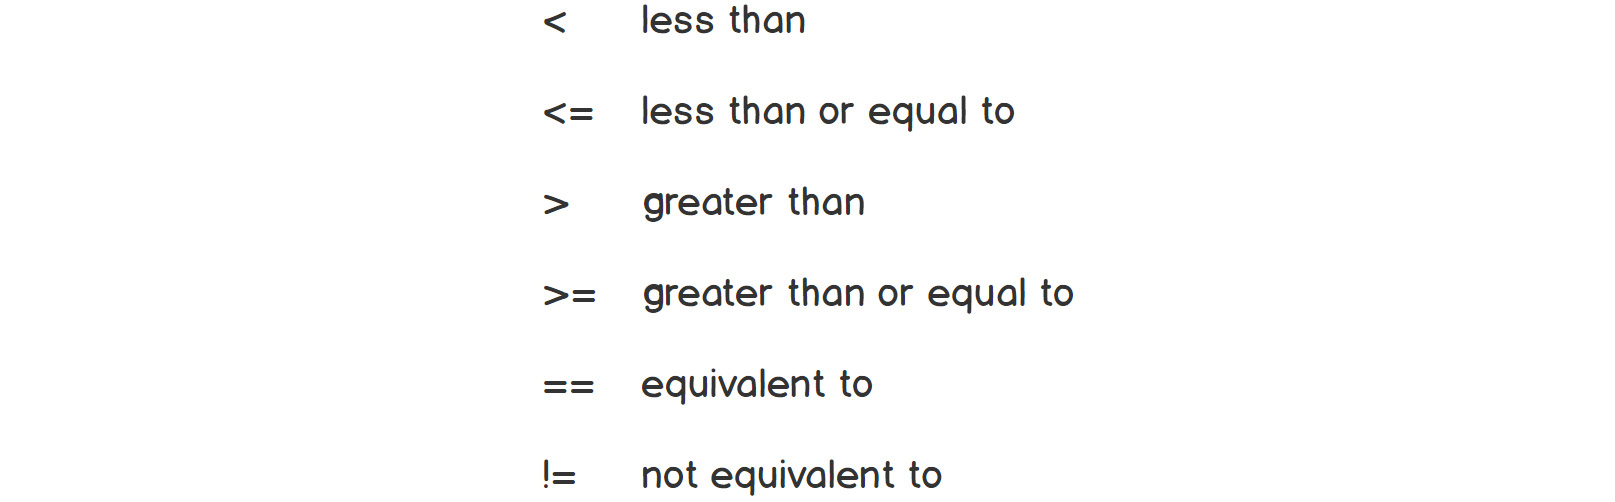 Figure 1.17: Comparison table with its corresponding symbols
